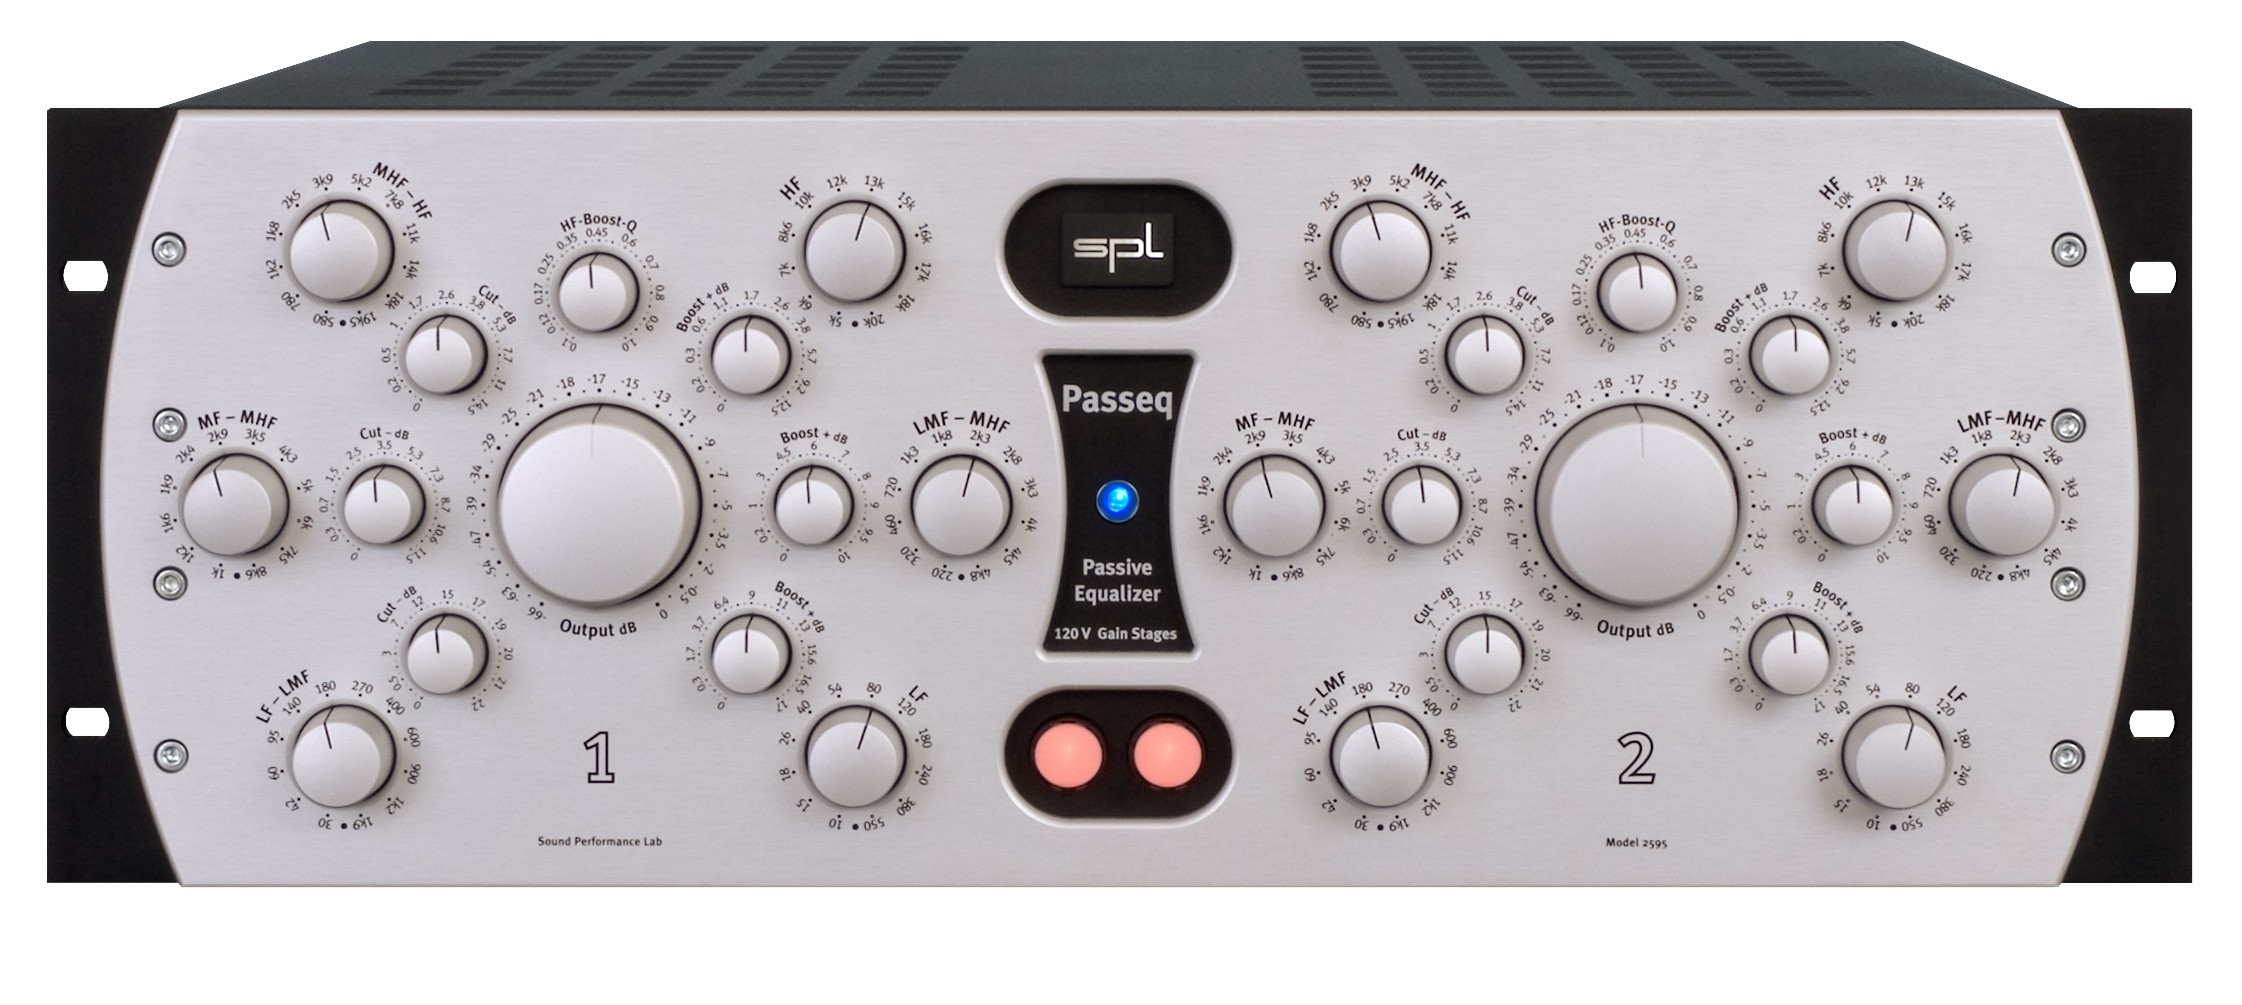 SPL Passeq Частотная обработка звука